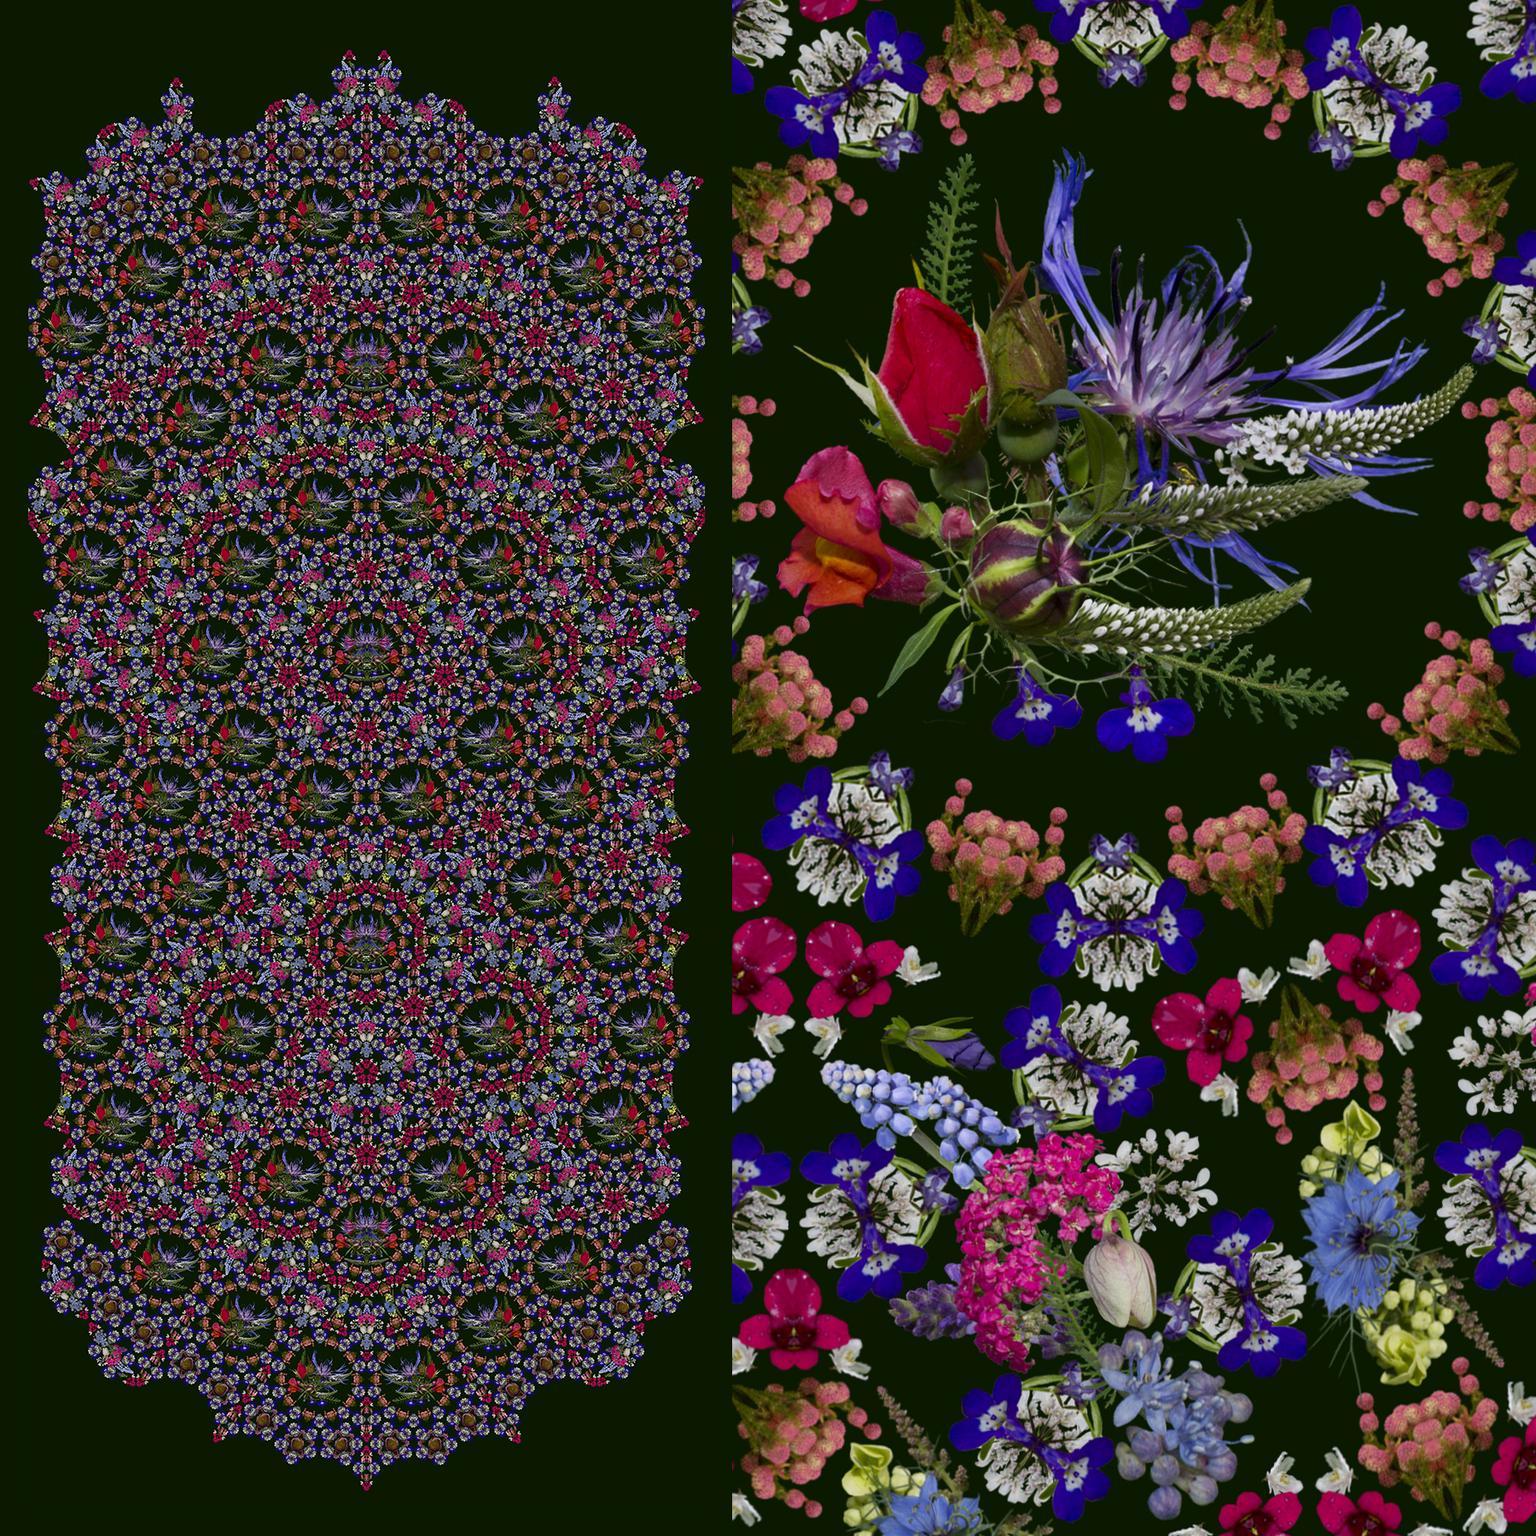 Image for entry 'Lobelia, Bachelor Buttons, Roses, Yarrow and Grape Hyacinth'